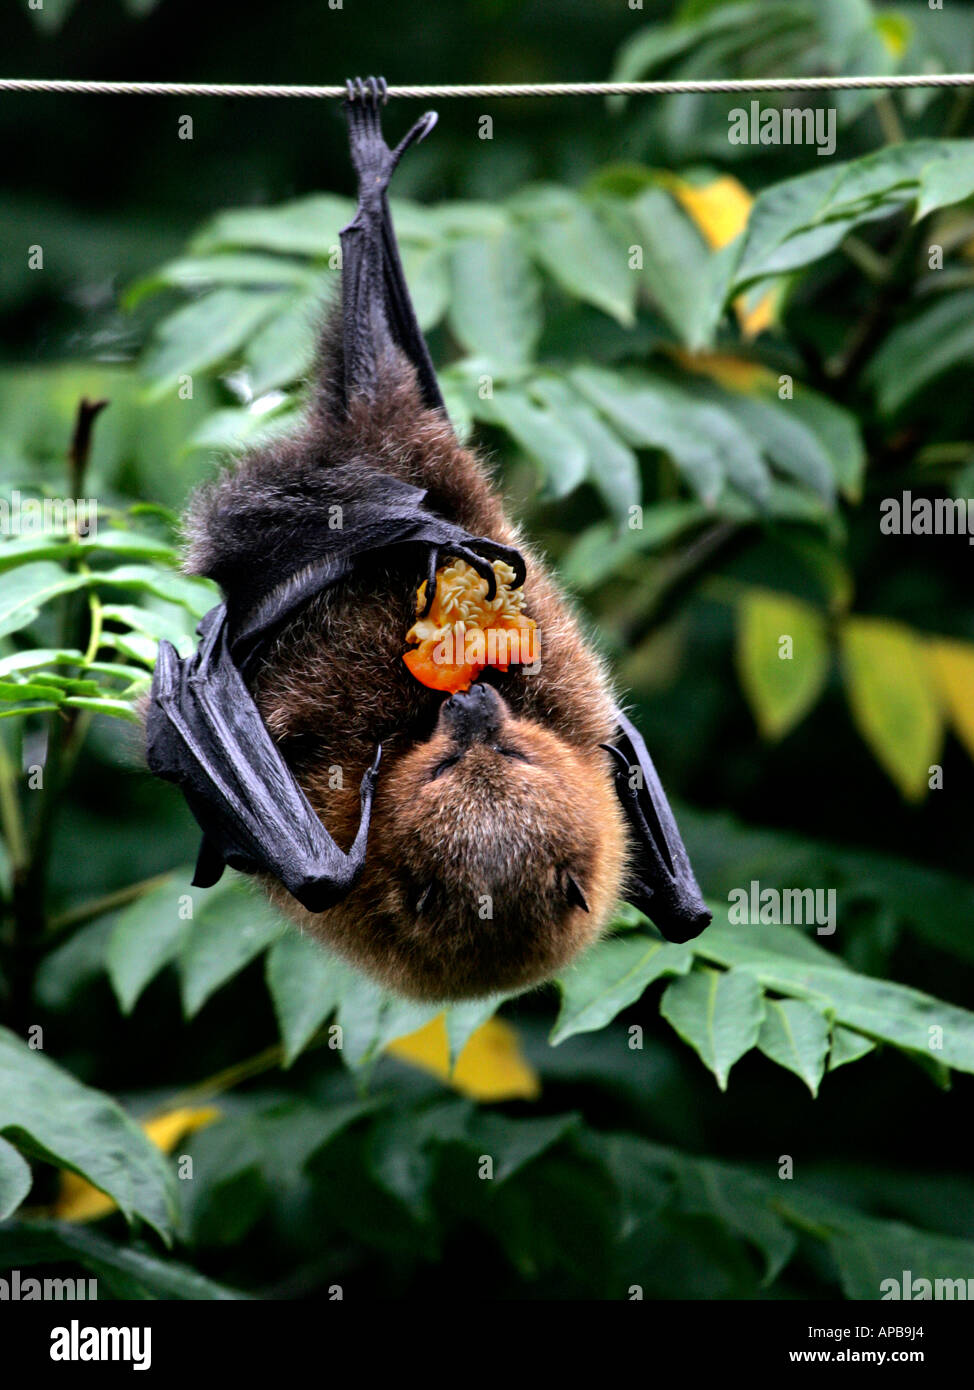 A fruitbat hanging upside down eating fruit. Stock Photo